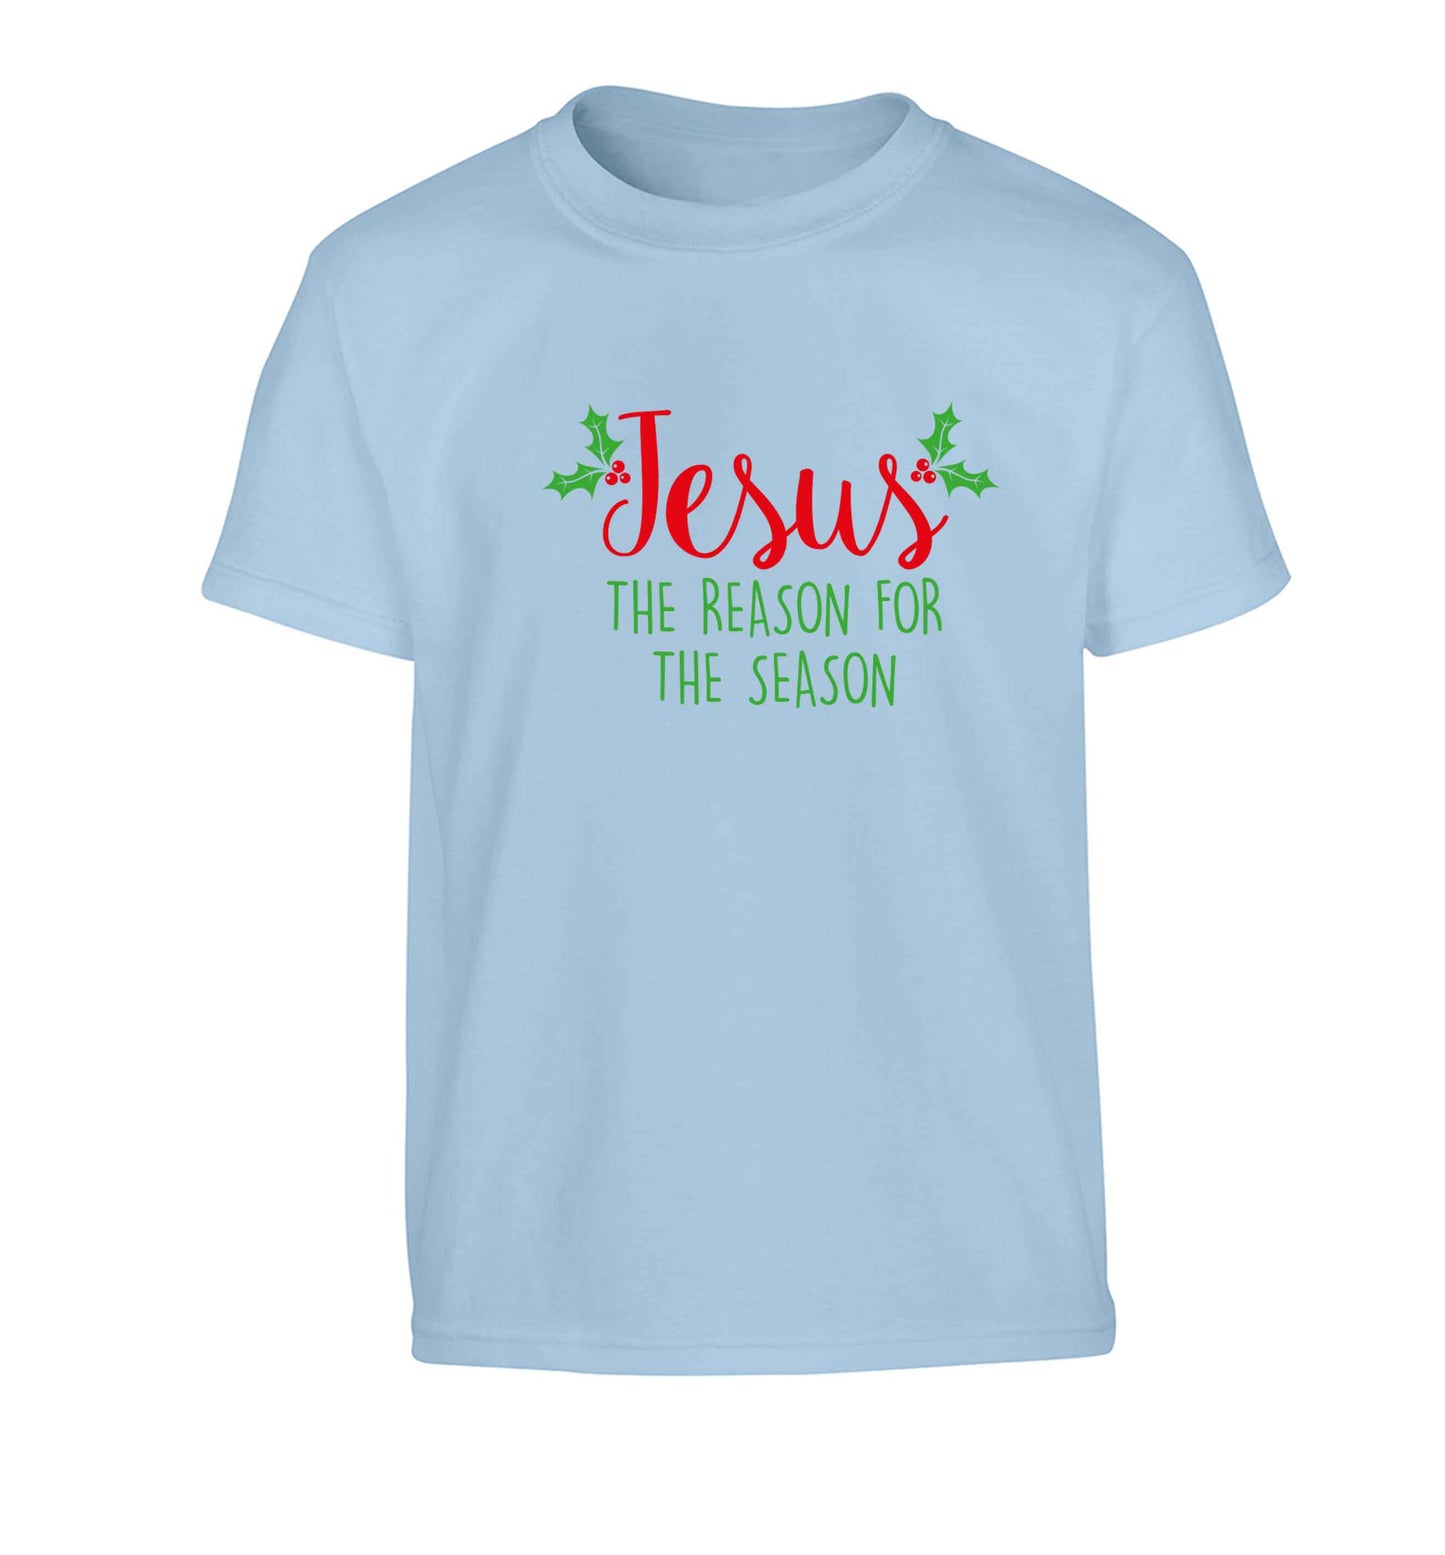 Jesus the reason for the season Children's light blue Tshirt 12-13 Years